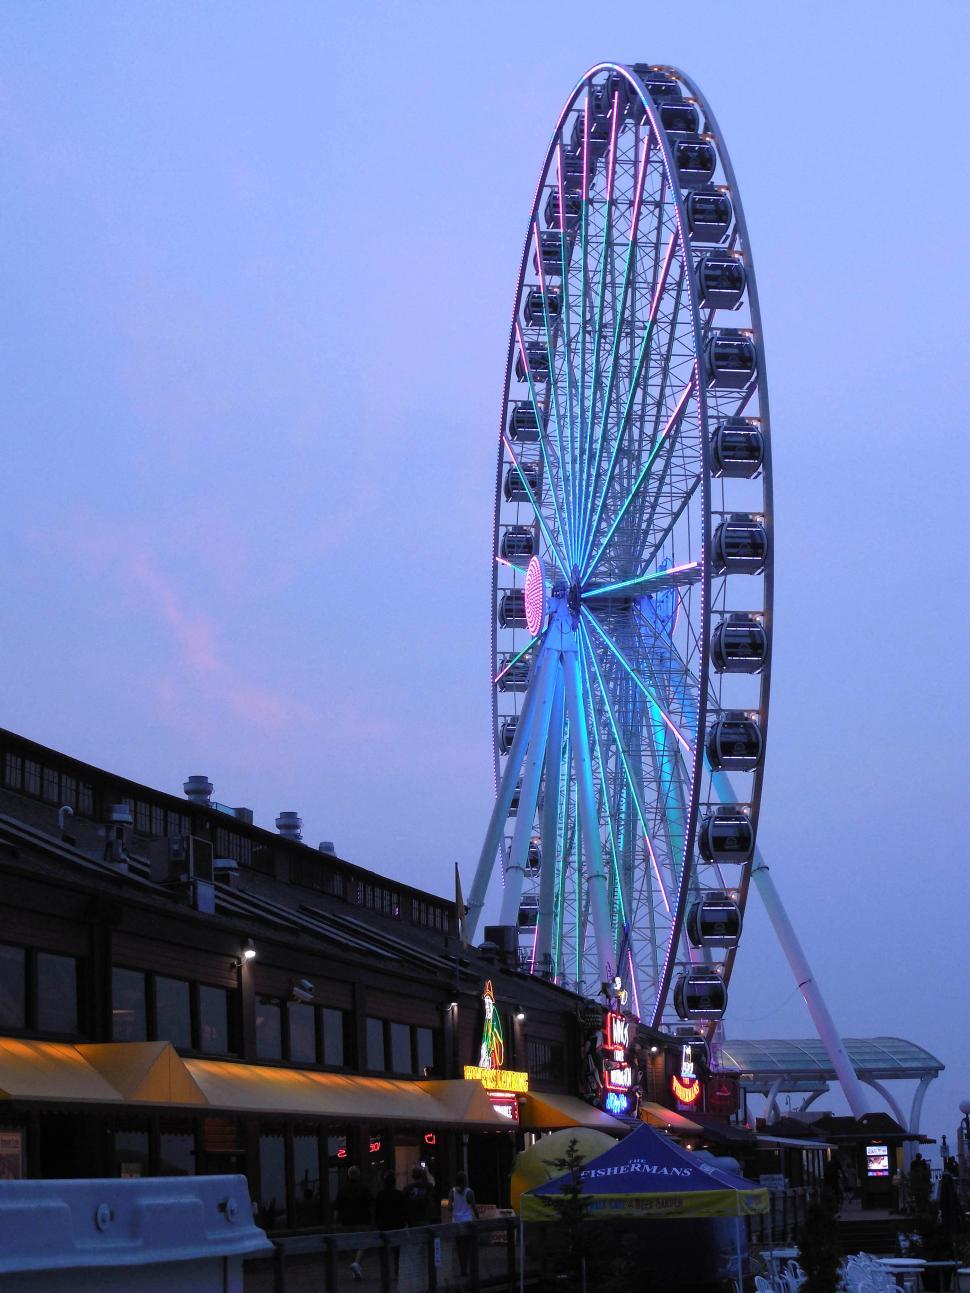 Free Image of Ferris Wheel  